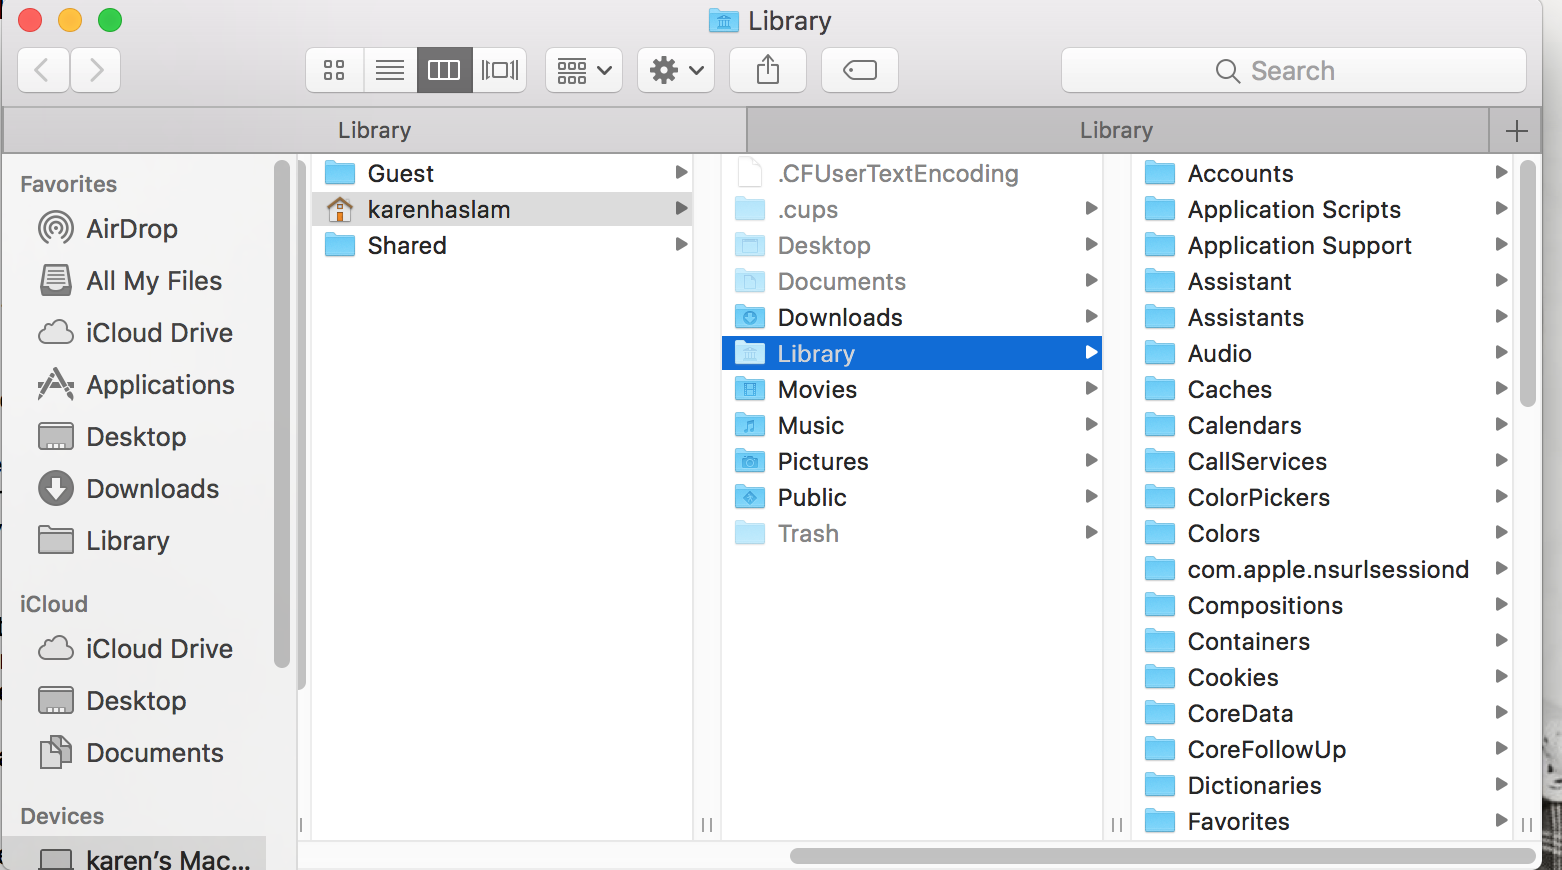 Mac widgets enable